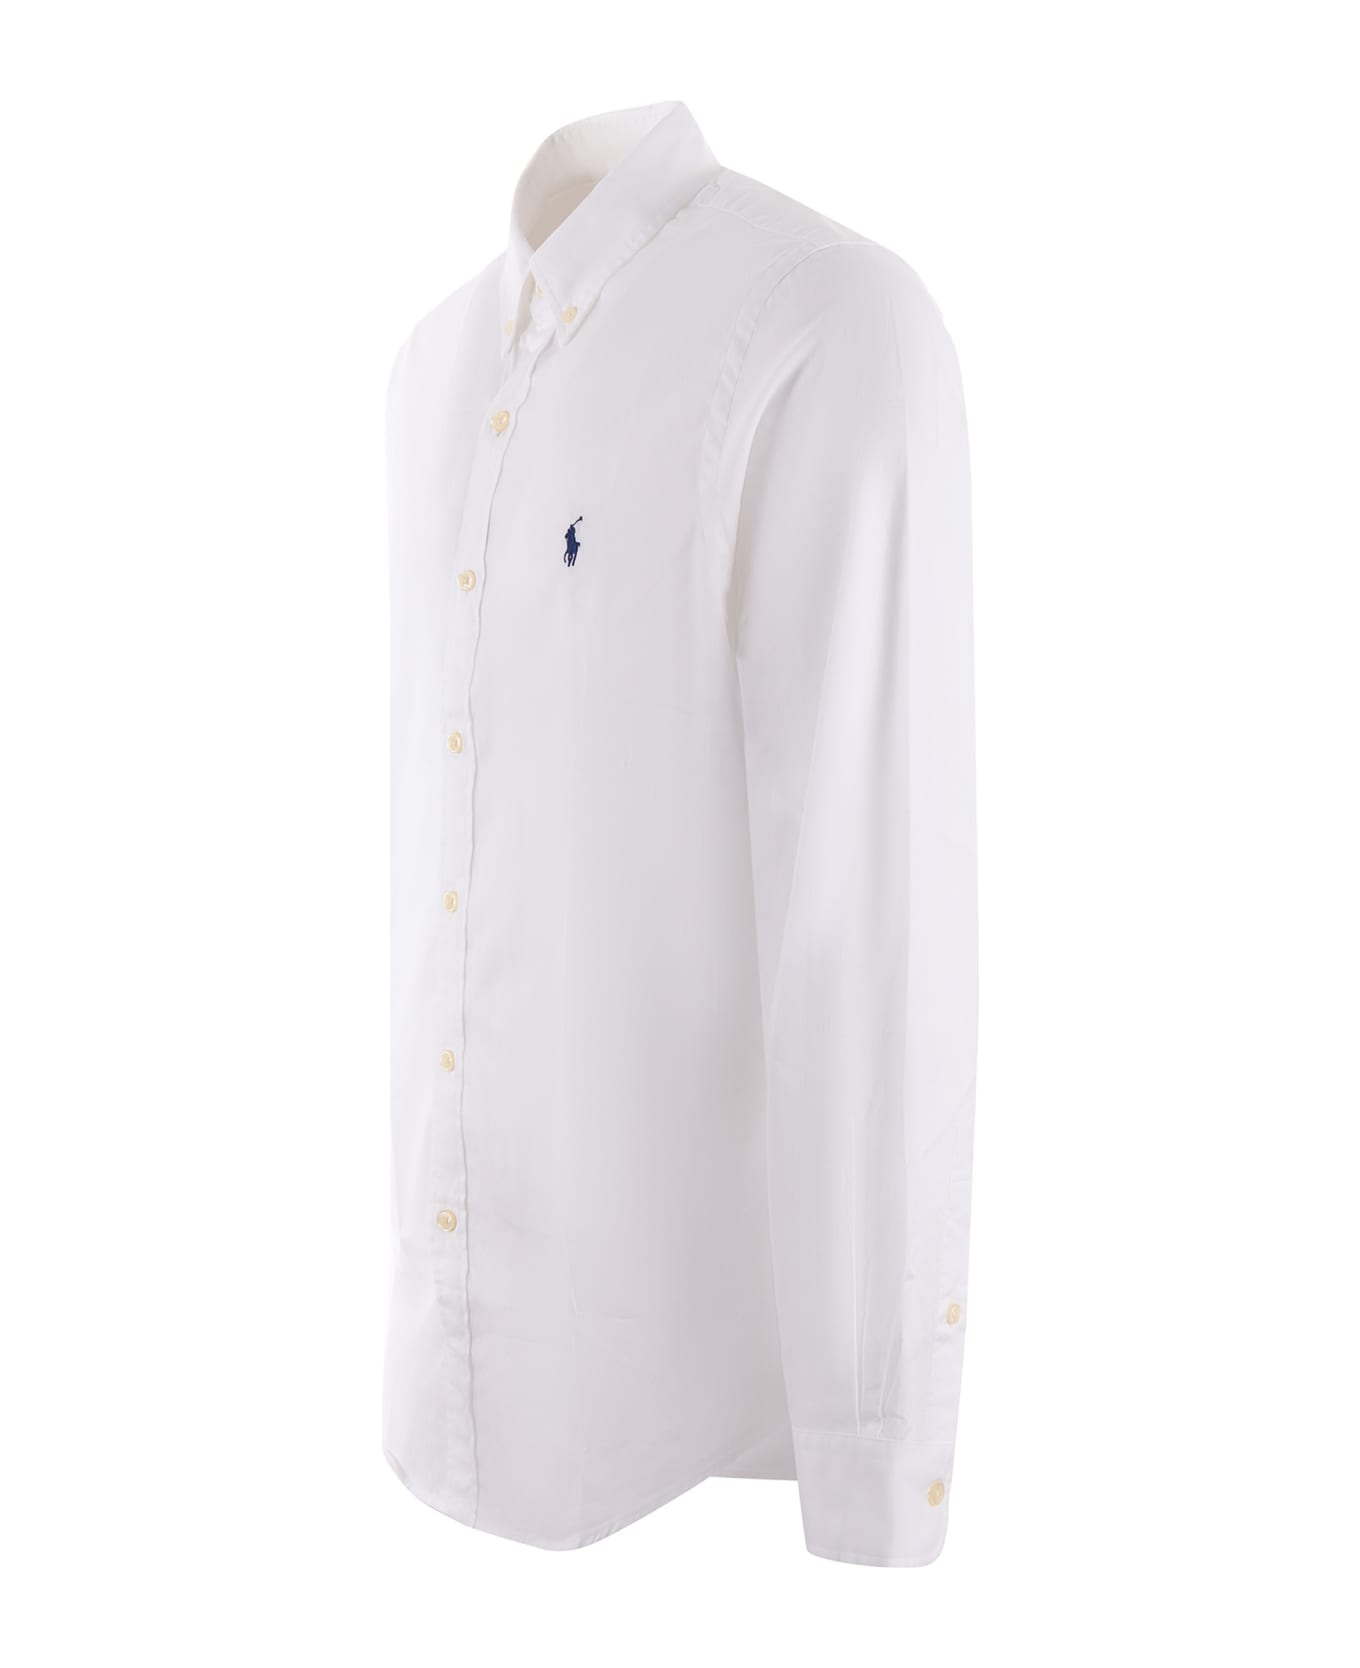 Polo Ralph Lauren Shirt - Bianco